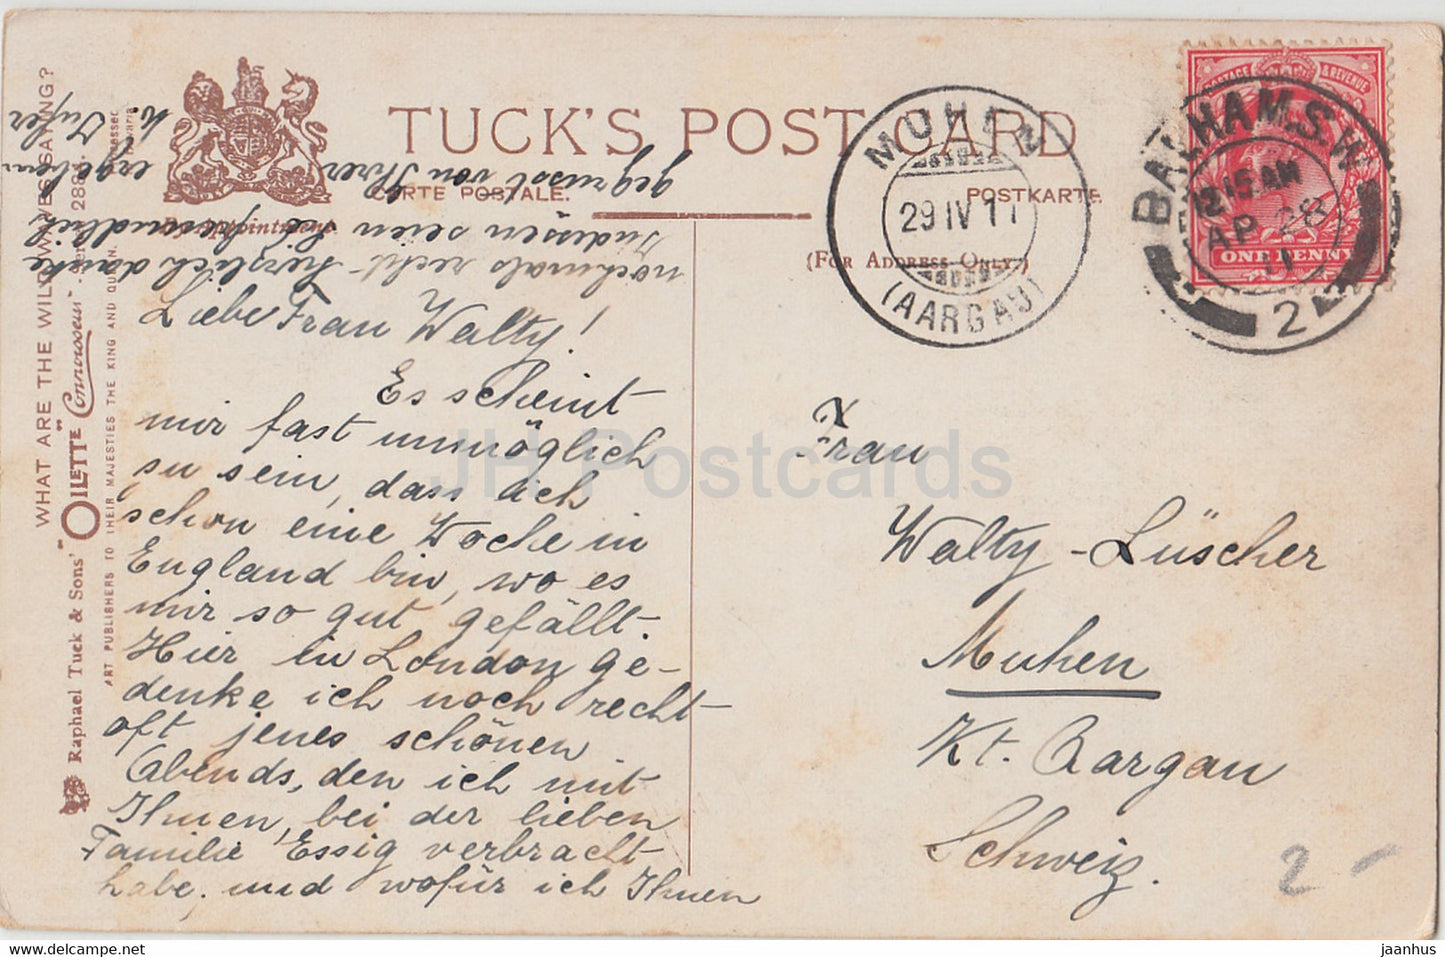 Stormy Sea - Raphael Tuck - Oilette - 2884 - carte postale ancienne - 1911 - Royaume-Uni - utilisé